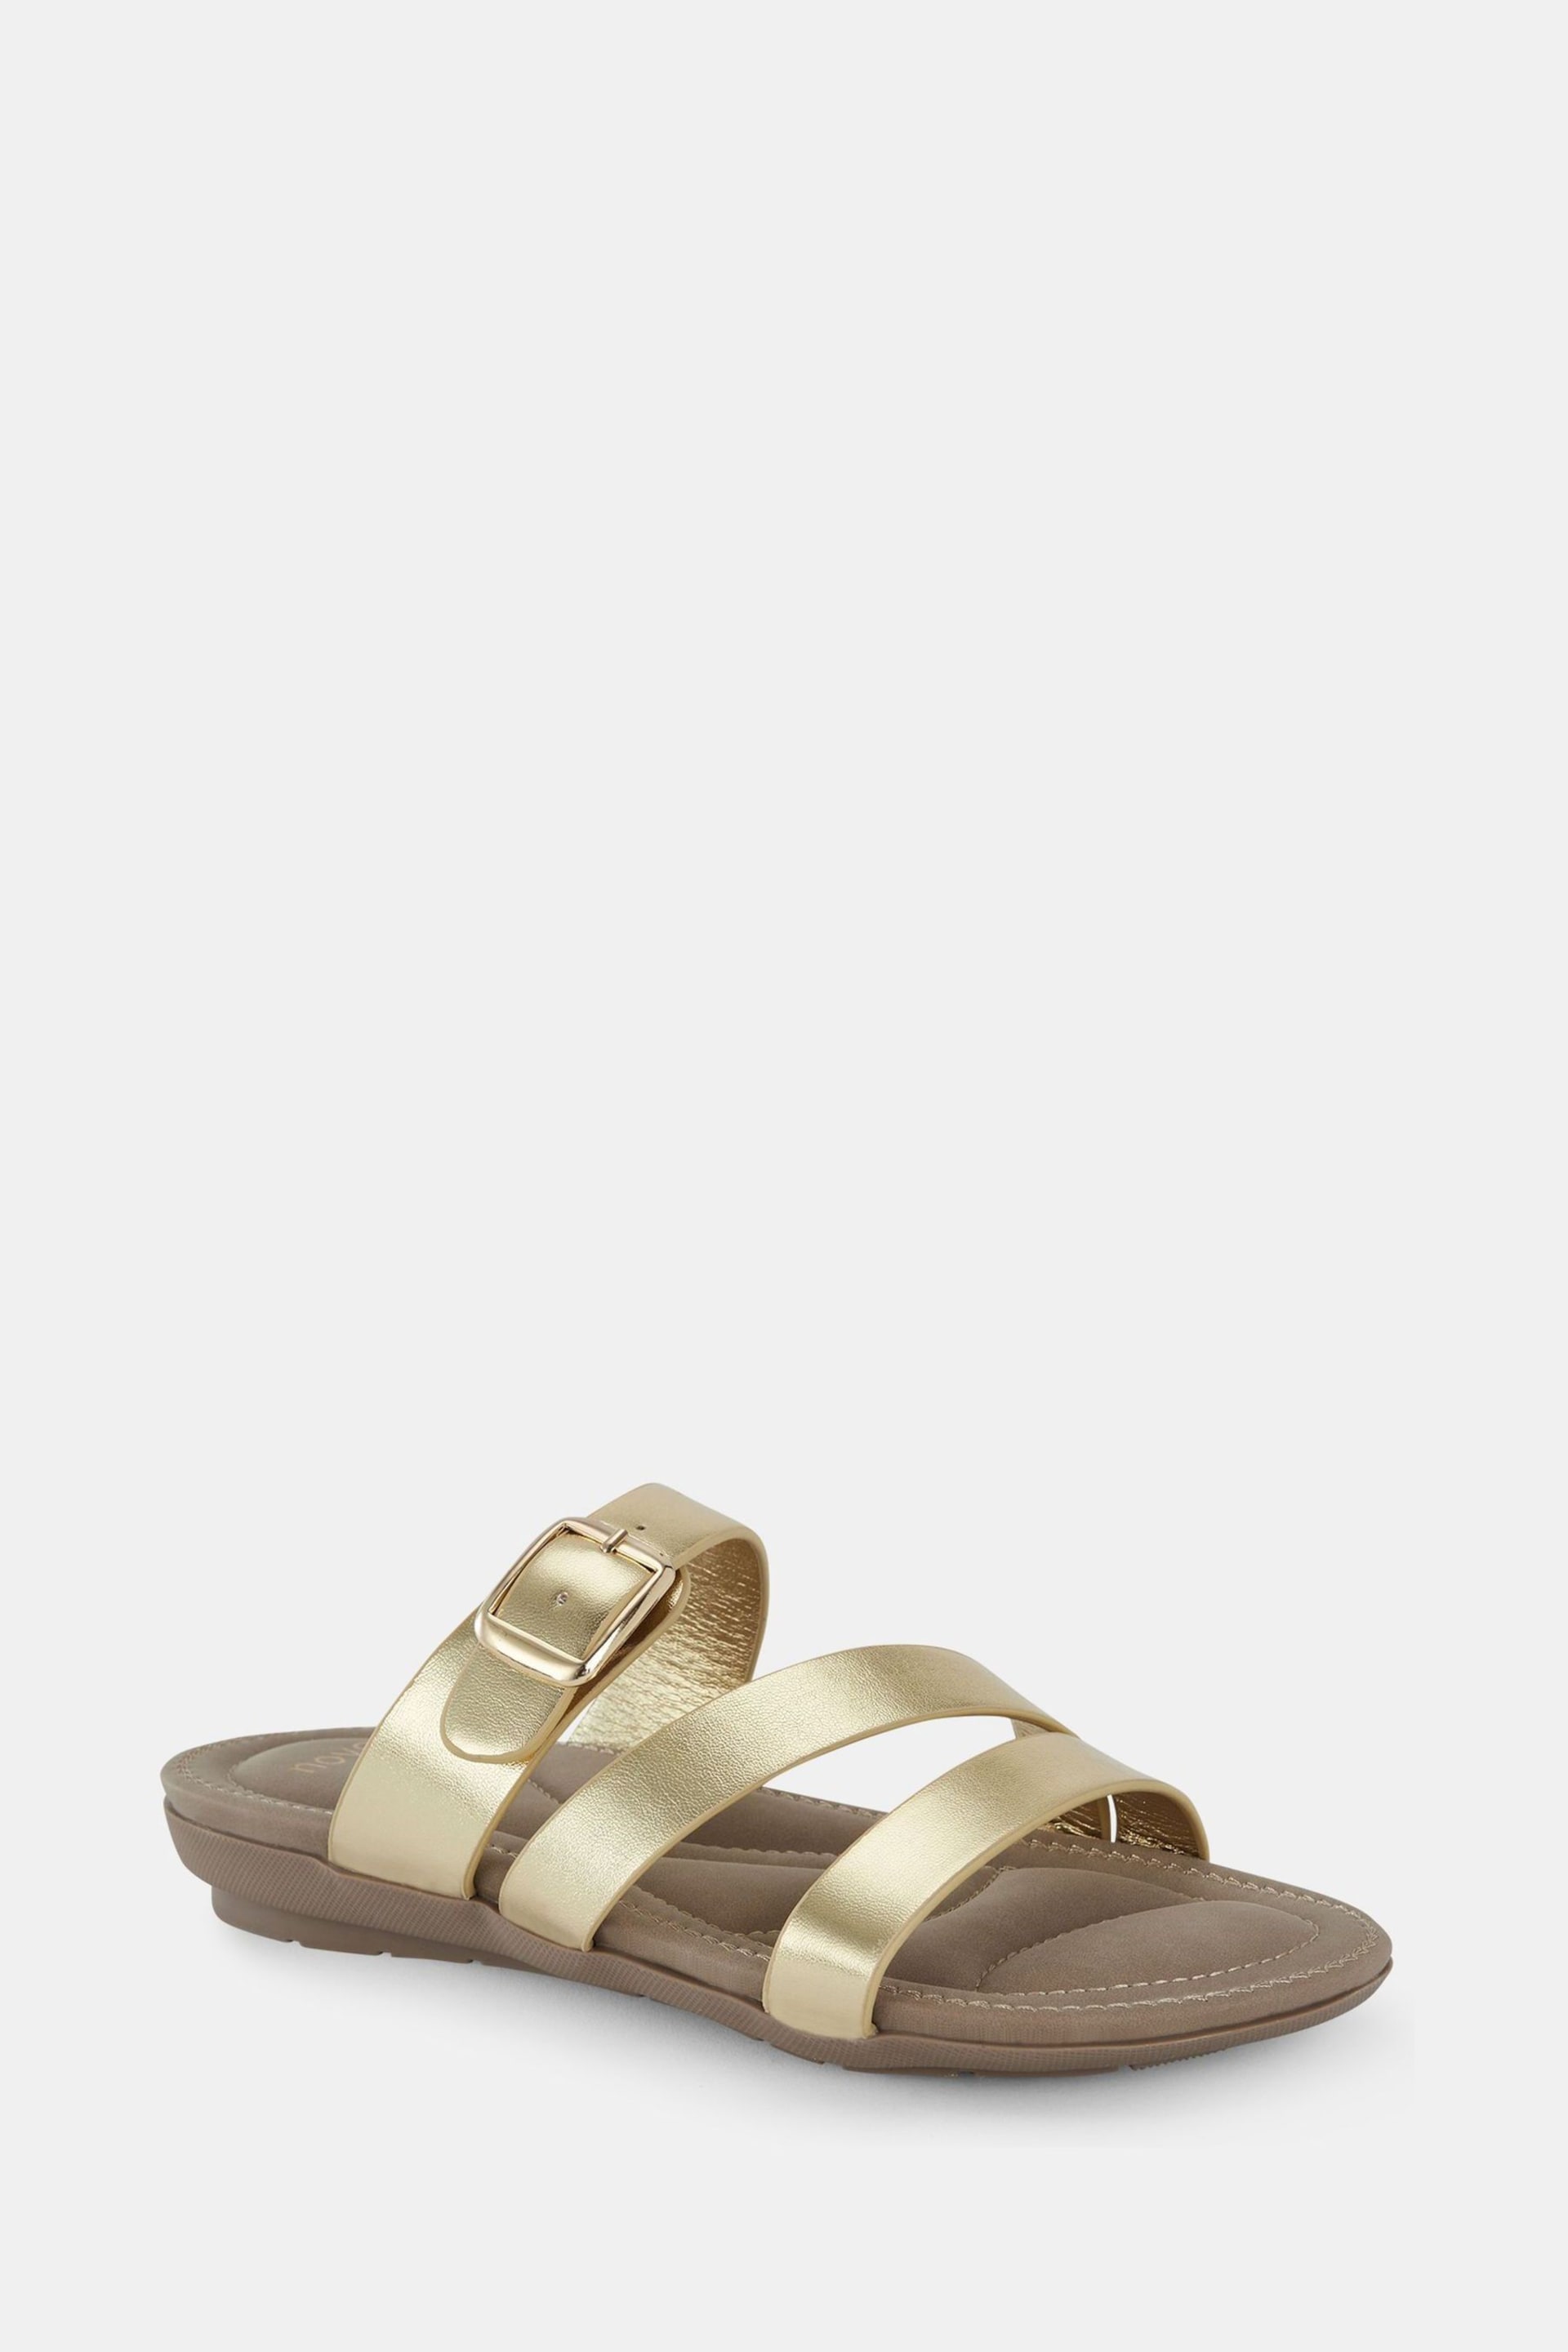 Novo Gold Tia Strappy Mule Sandals - Image 3 of 6